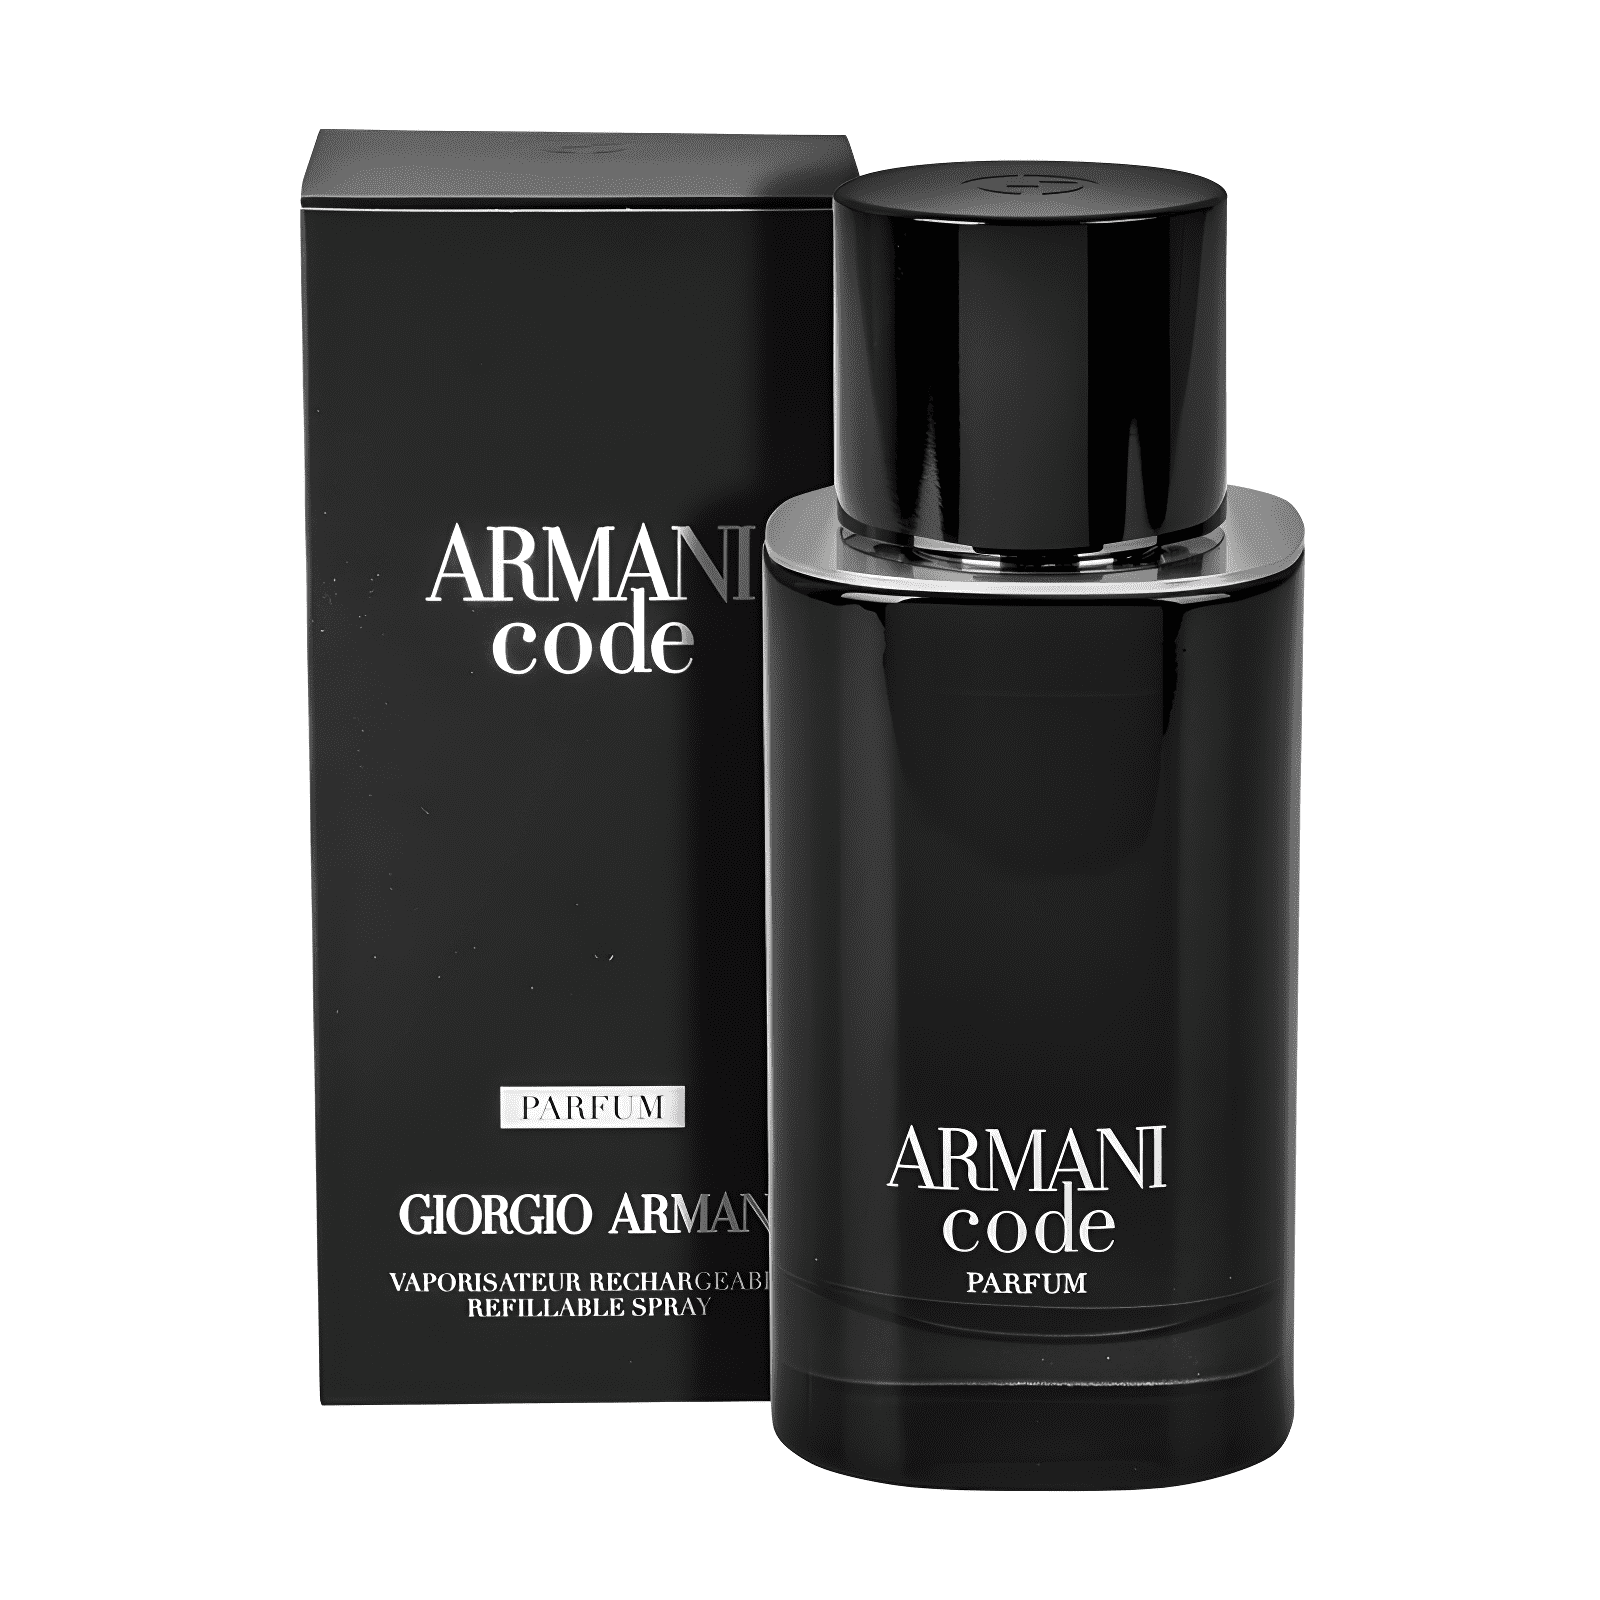 ARMANI CODE HOMME Parfum Vaporisateur Rechargeable Giorgio Armani